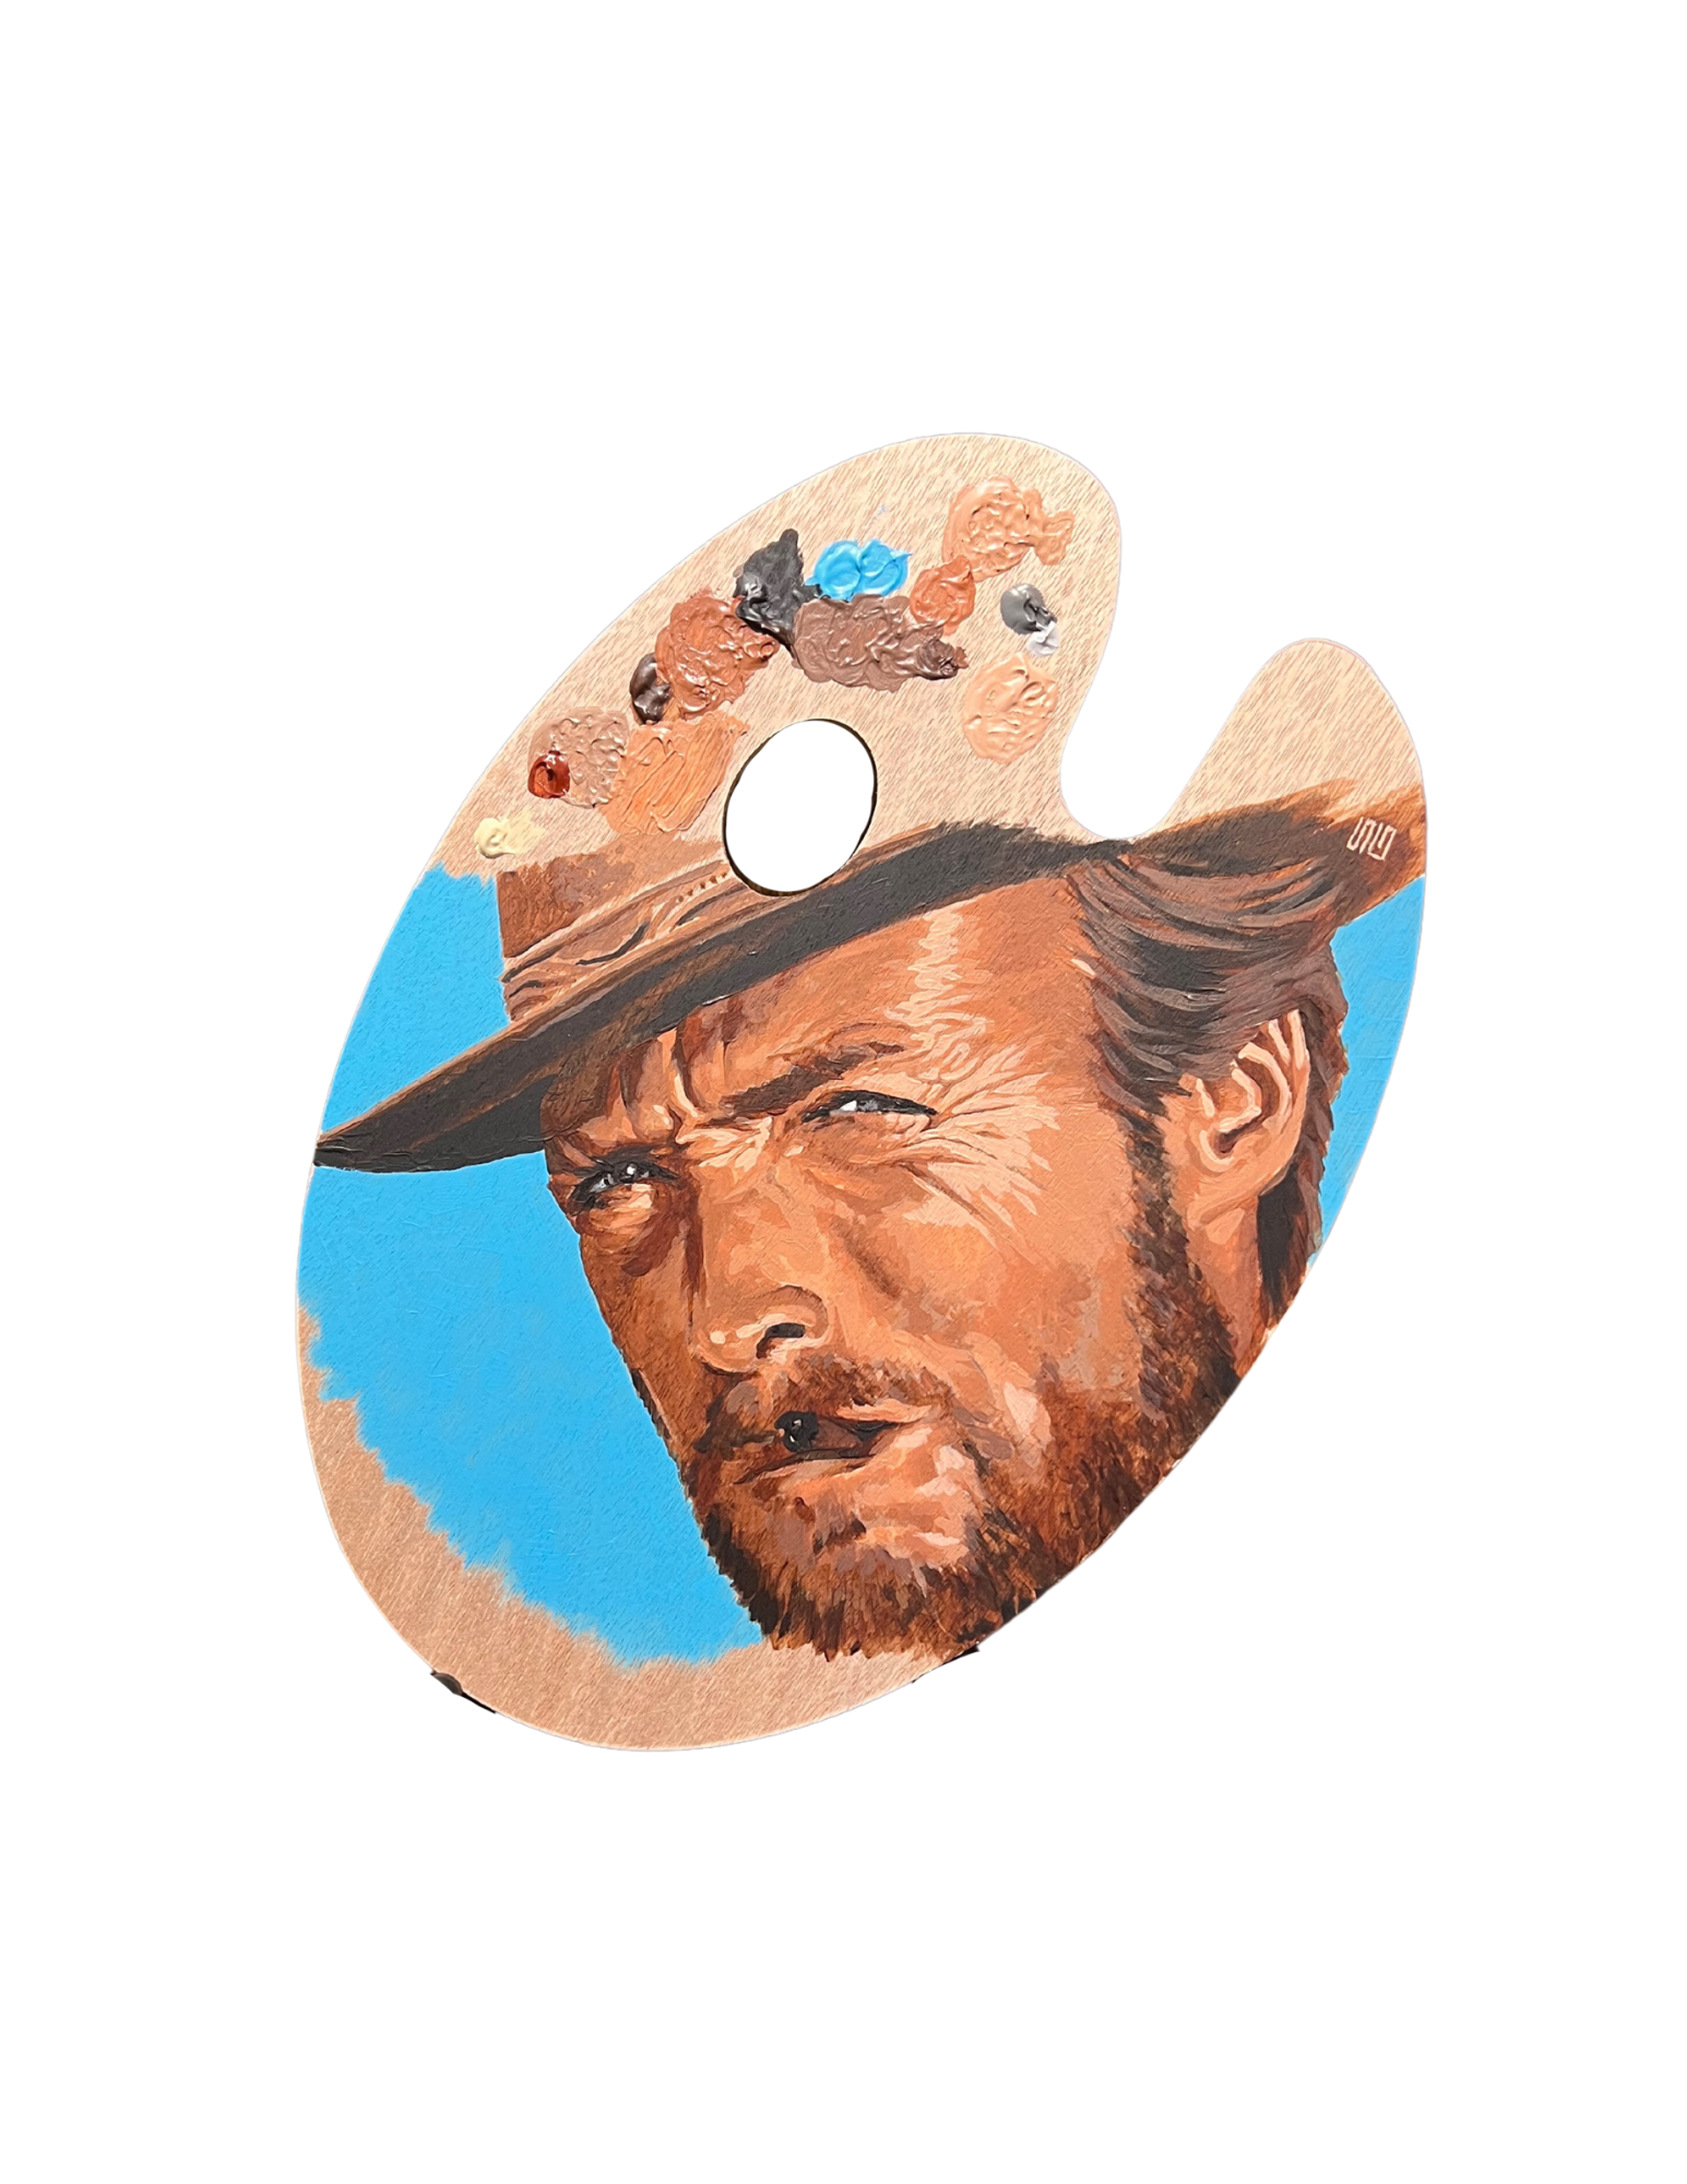 Palette #11 Clint Eastwood by Seth Gordon